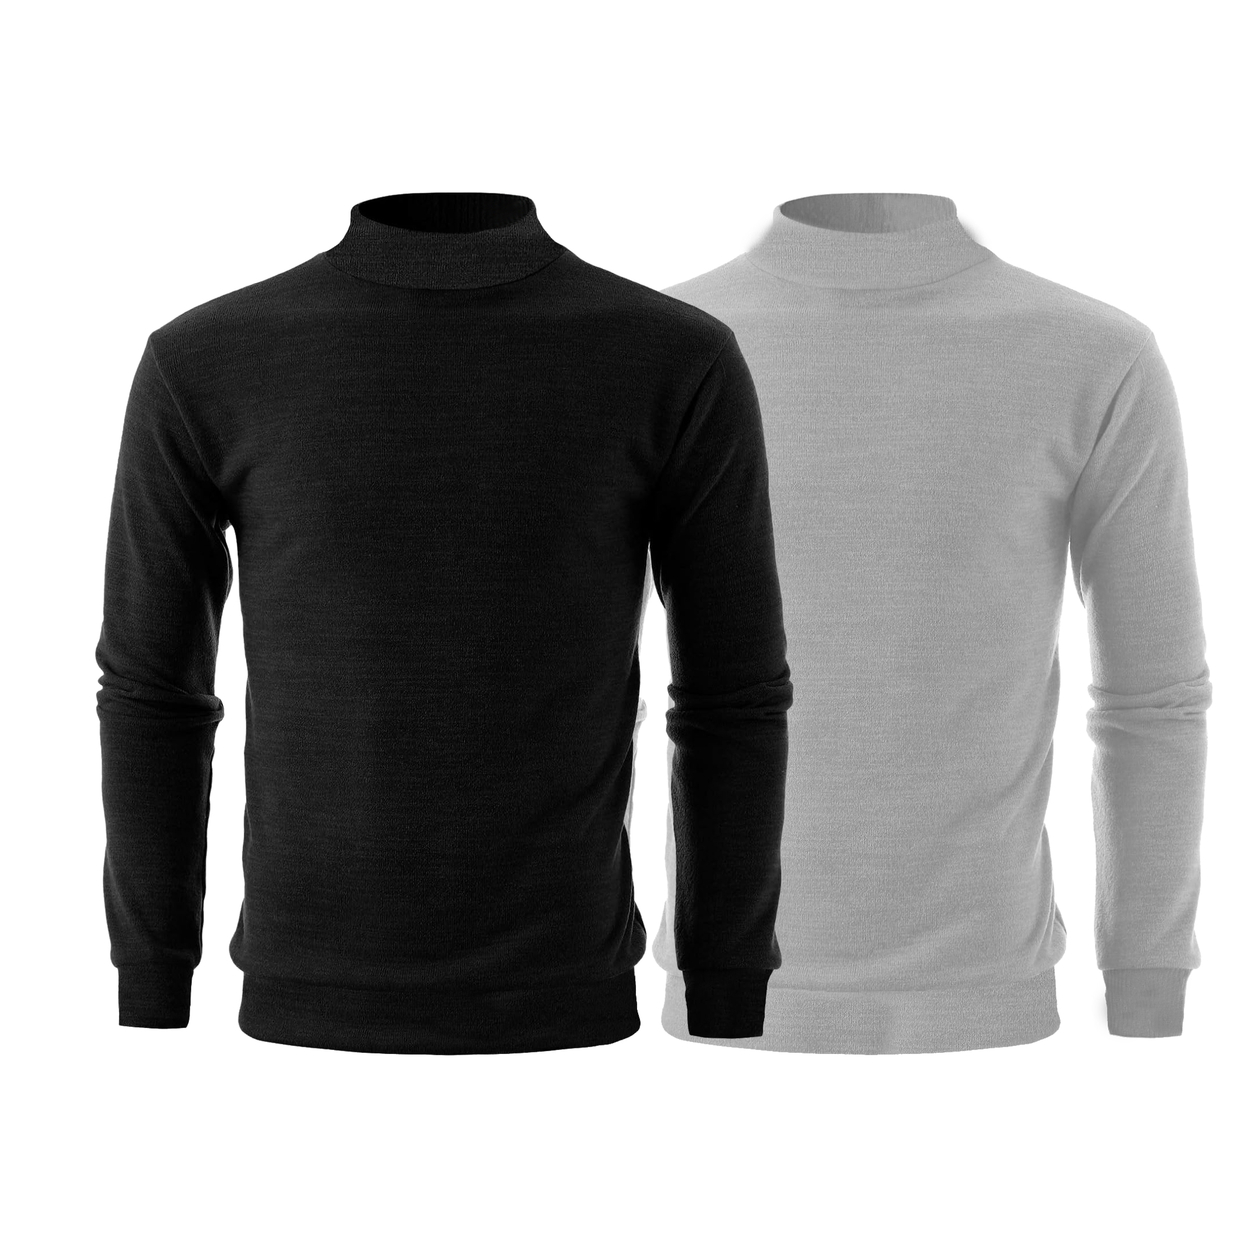 2-Pack: Men's Winter Warm Cozy Knit Slim Fit Mock Neck Sweater - White & White, Xx-large